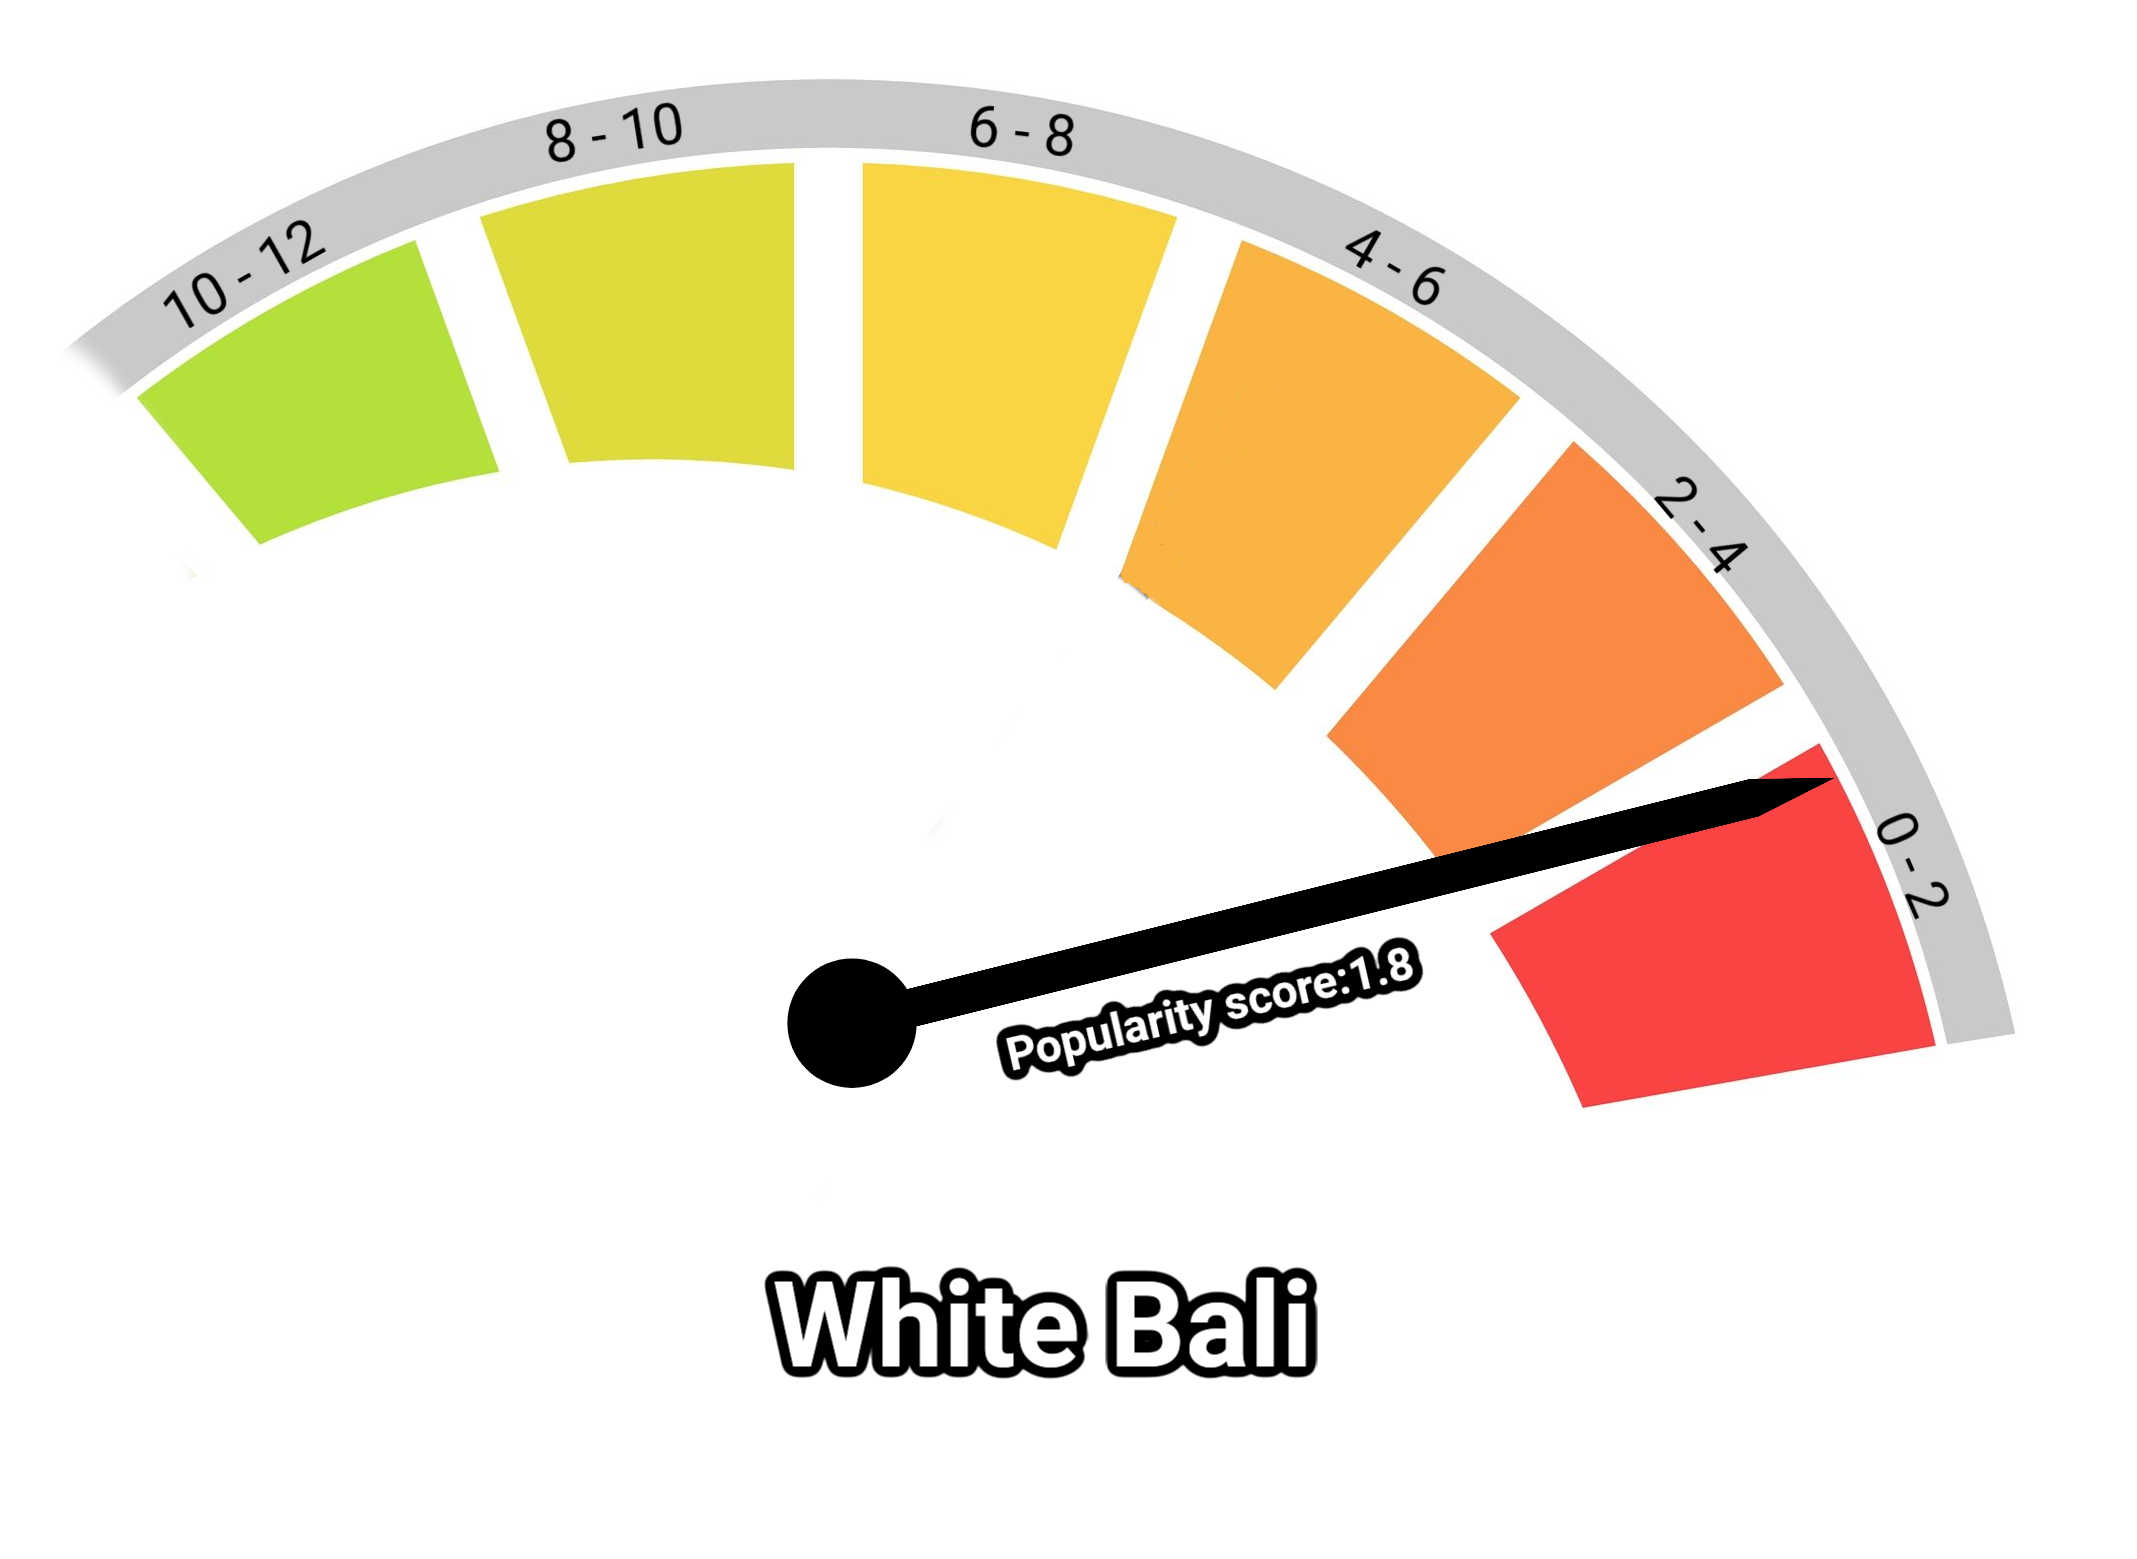 image of white bali kratom popularity score